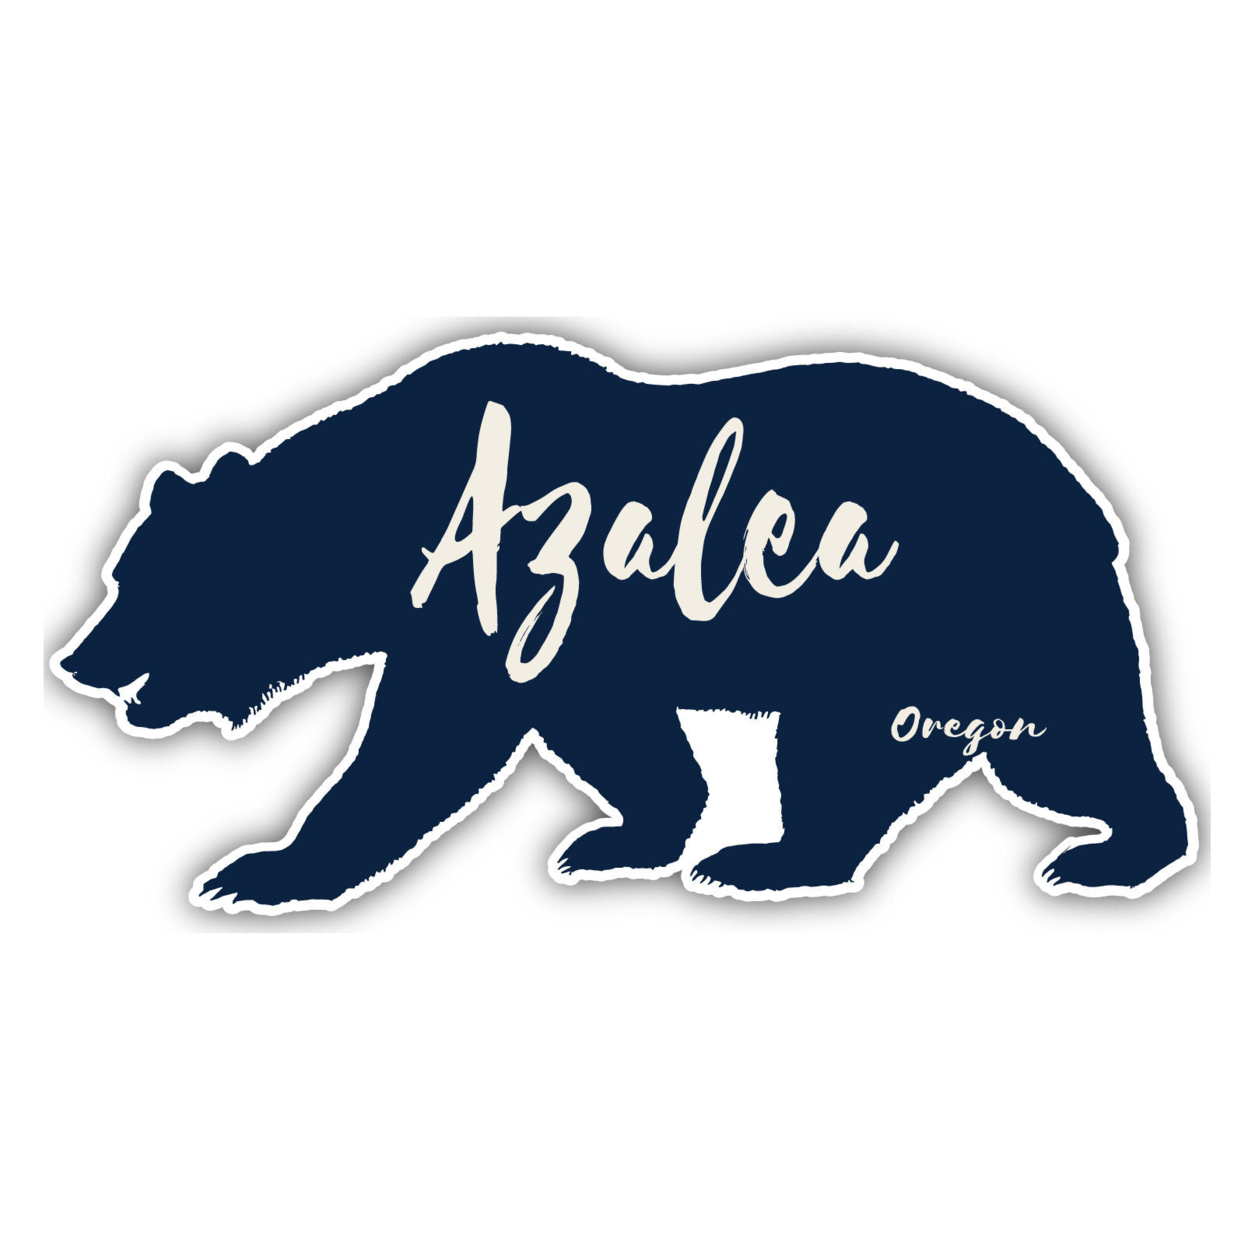 Azalea Oregon Souvenir Decorative Stickers (Choose Theme And Size) - Single Unit, 8-Inch, Bear